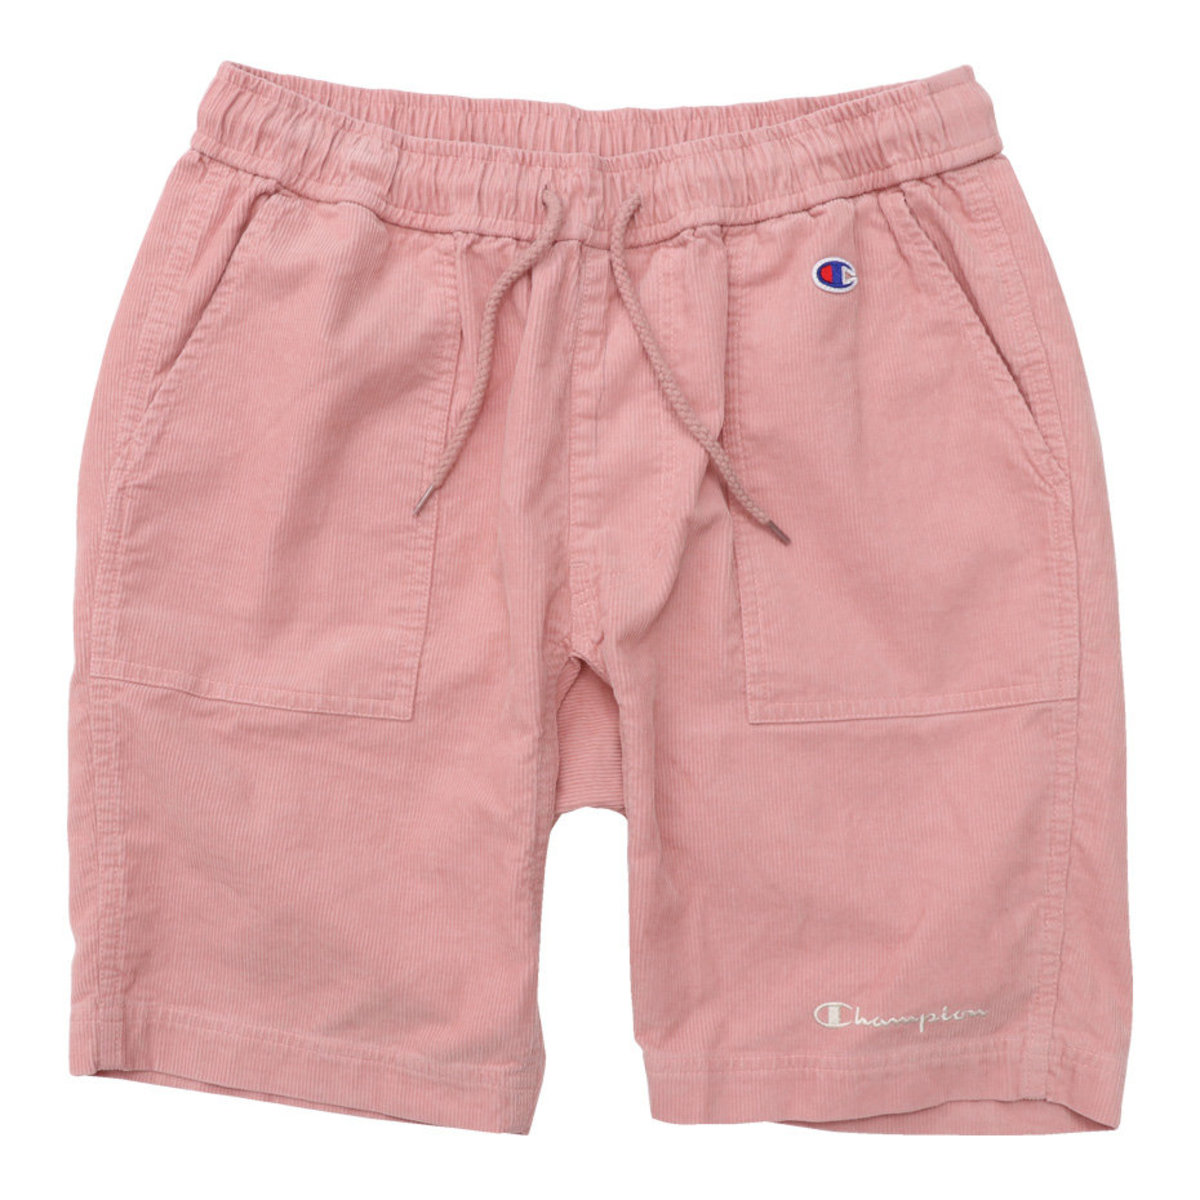 light pink champion shorts